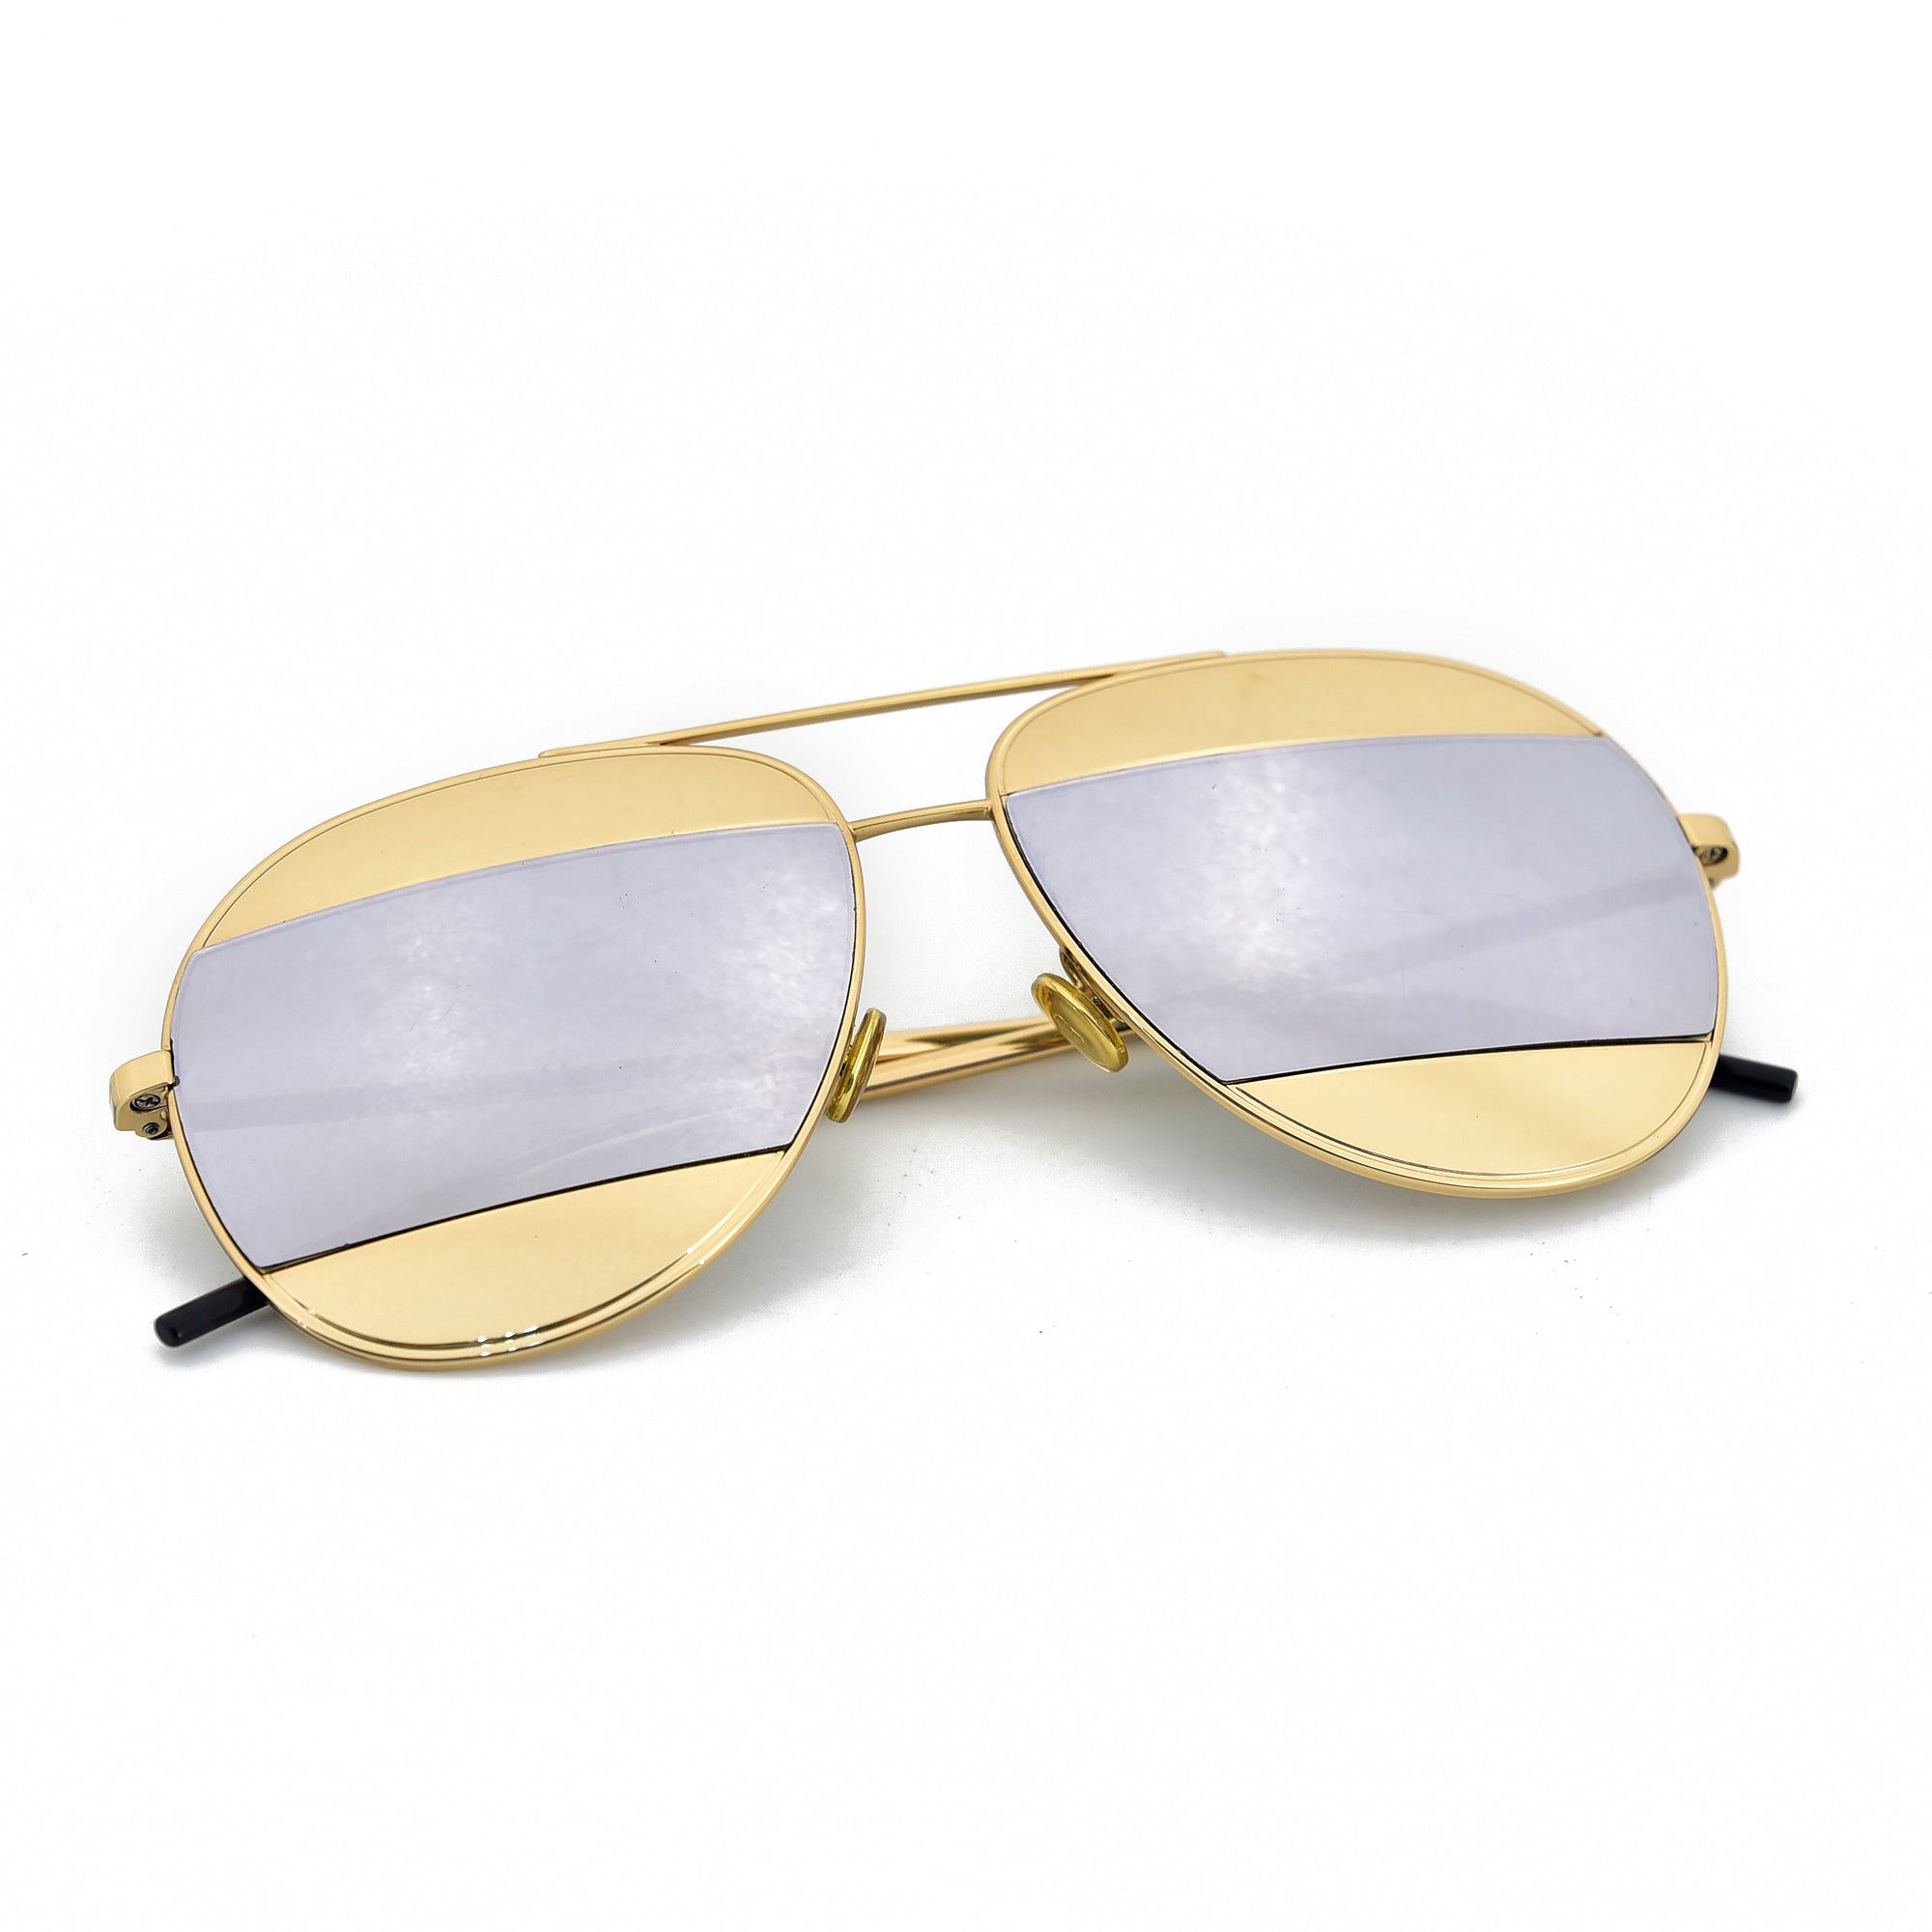 DiorSplit 1 Aviator  Mirrored Sunglasses